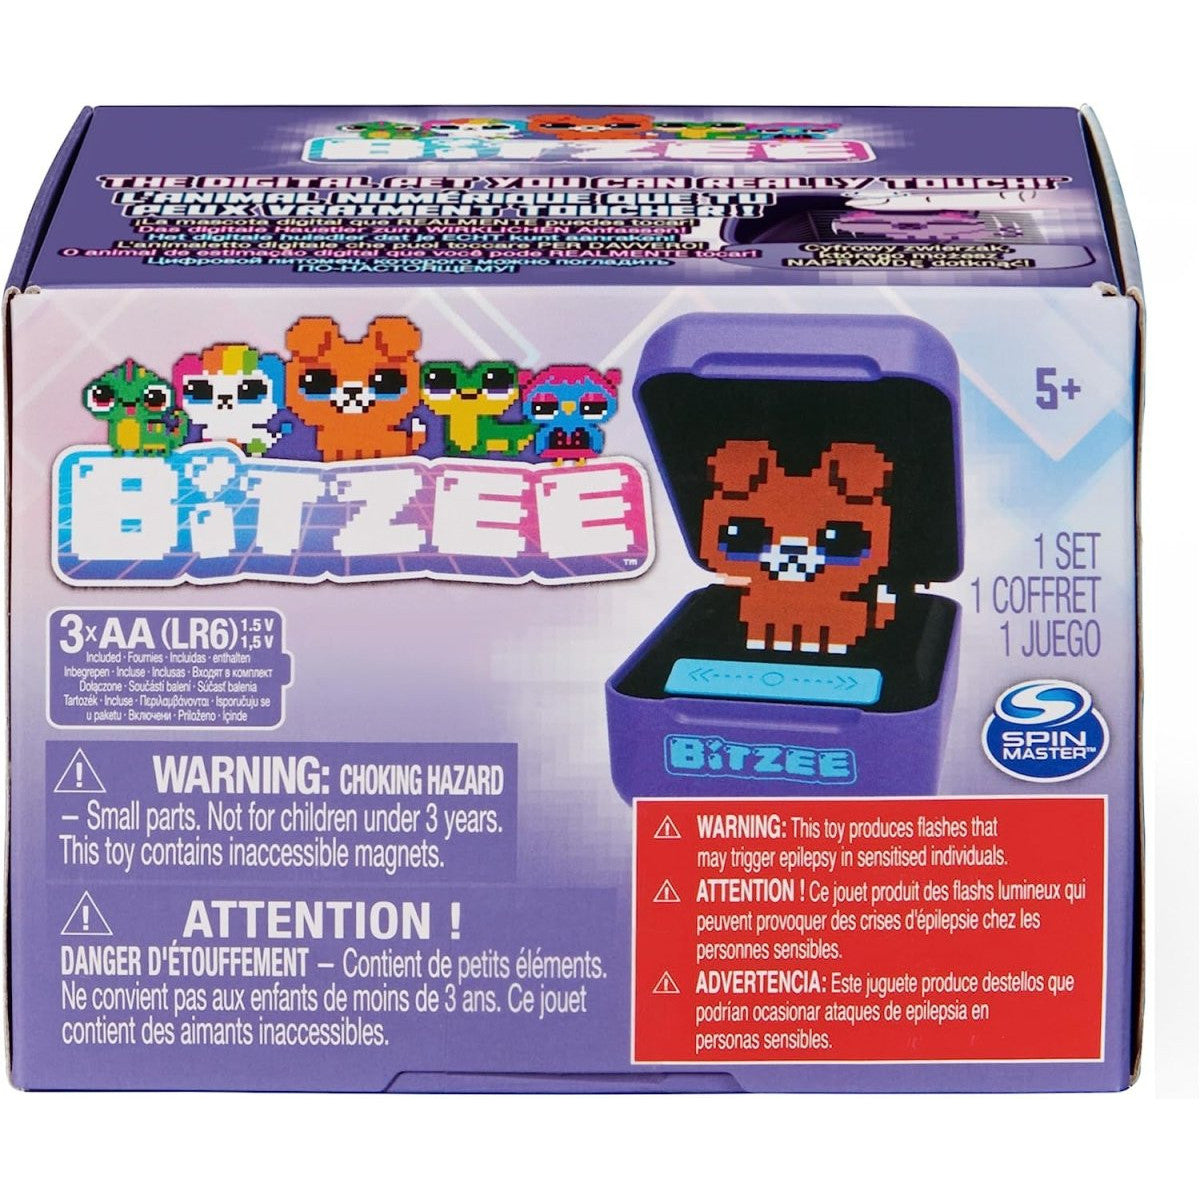 Bitzee Interactive Digital Pet Review - Super cutie new digital pet is fun  for kids & parents - Explosion Network